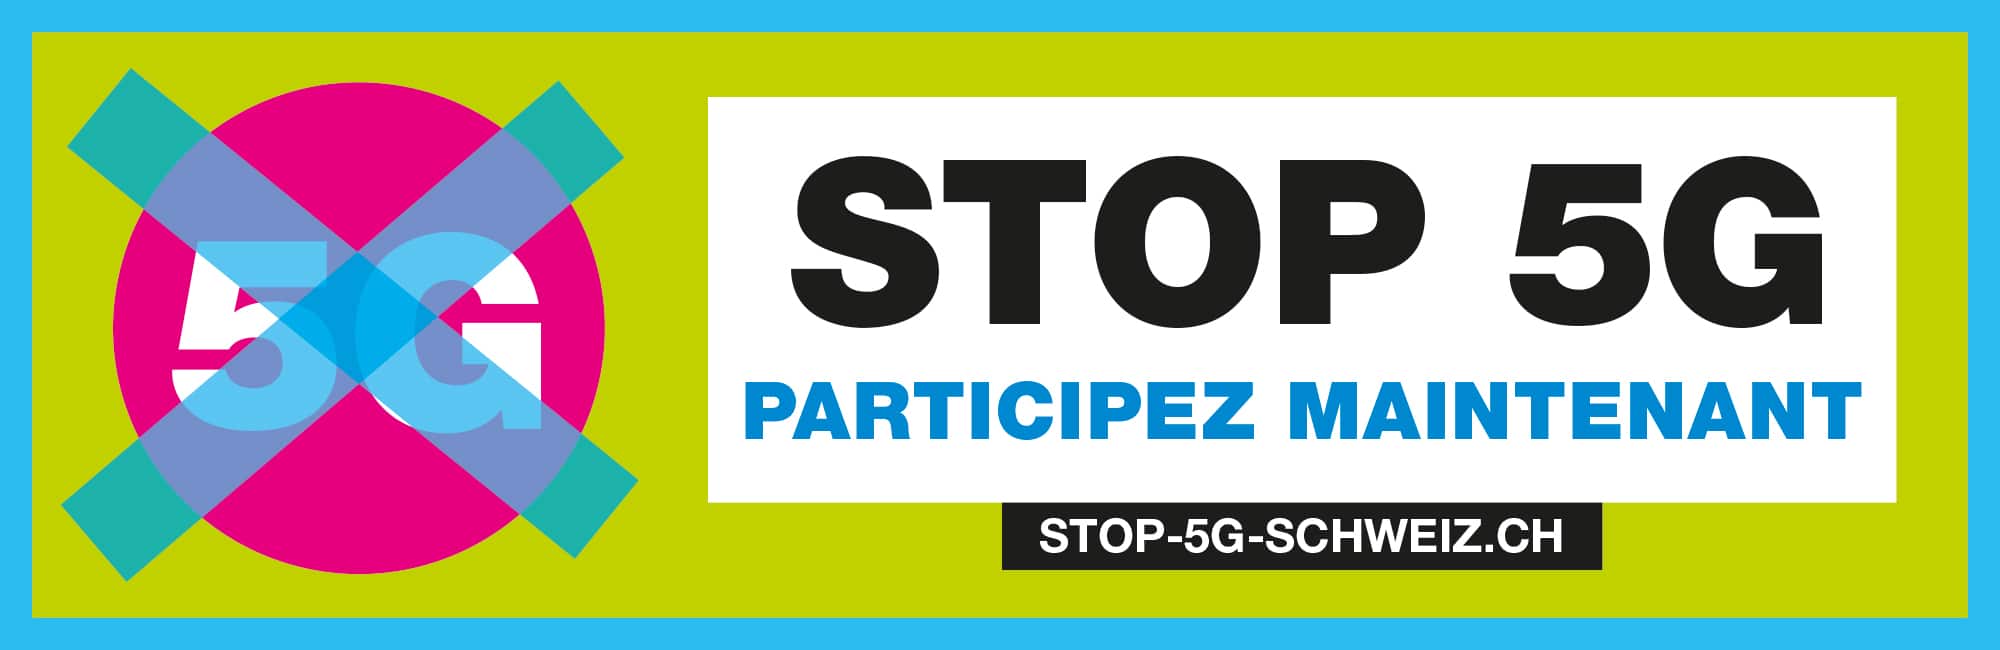 Stop 5G Schweiz – Participez maintenant !!